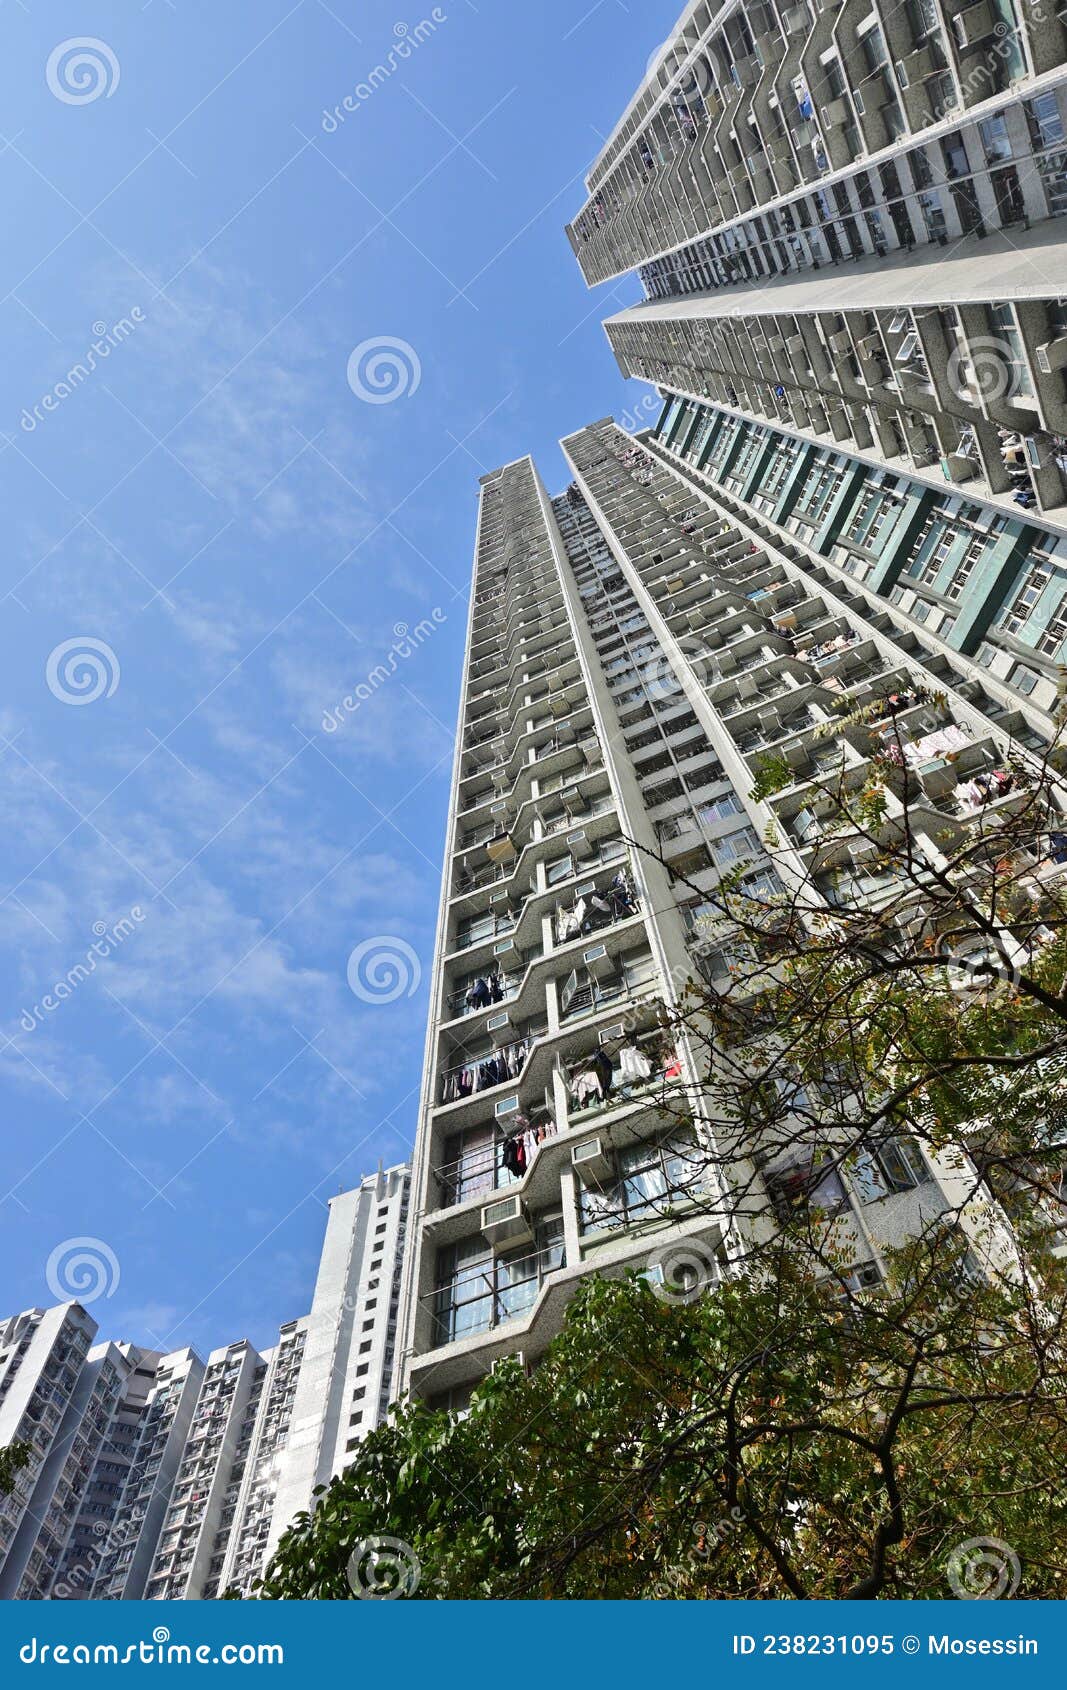 residential urban city skyscrapper